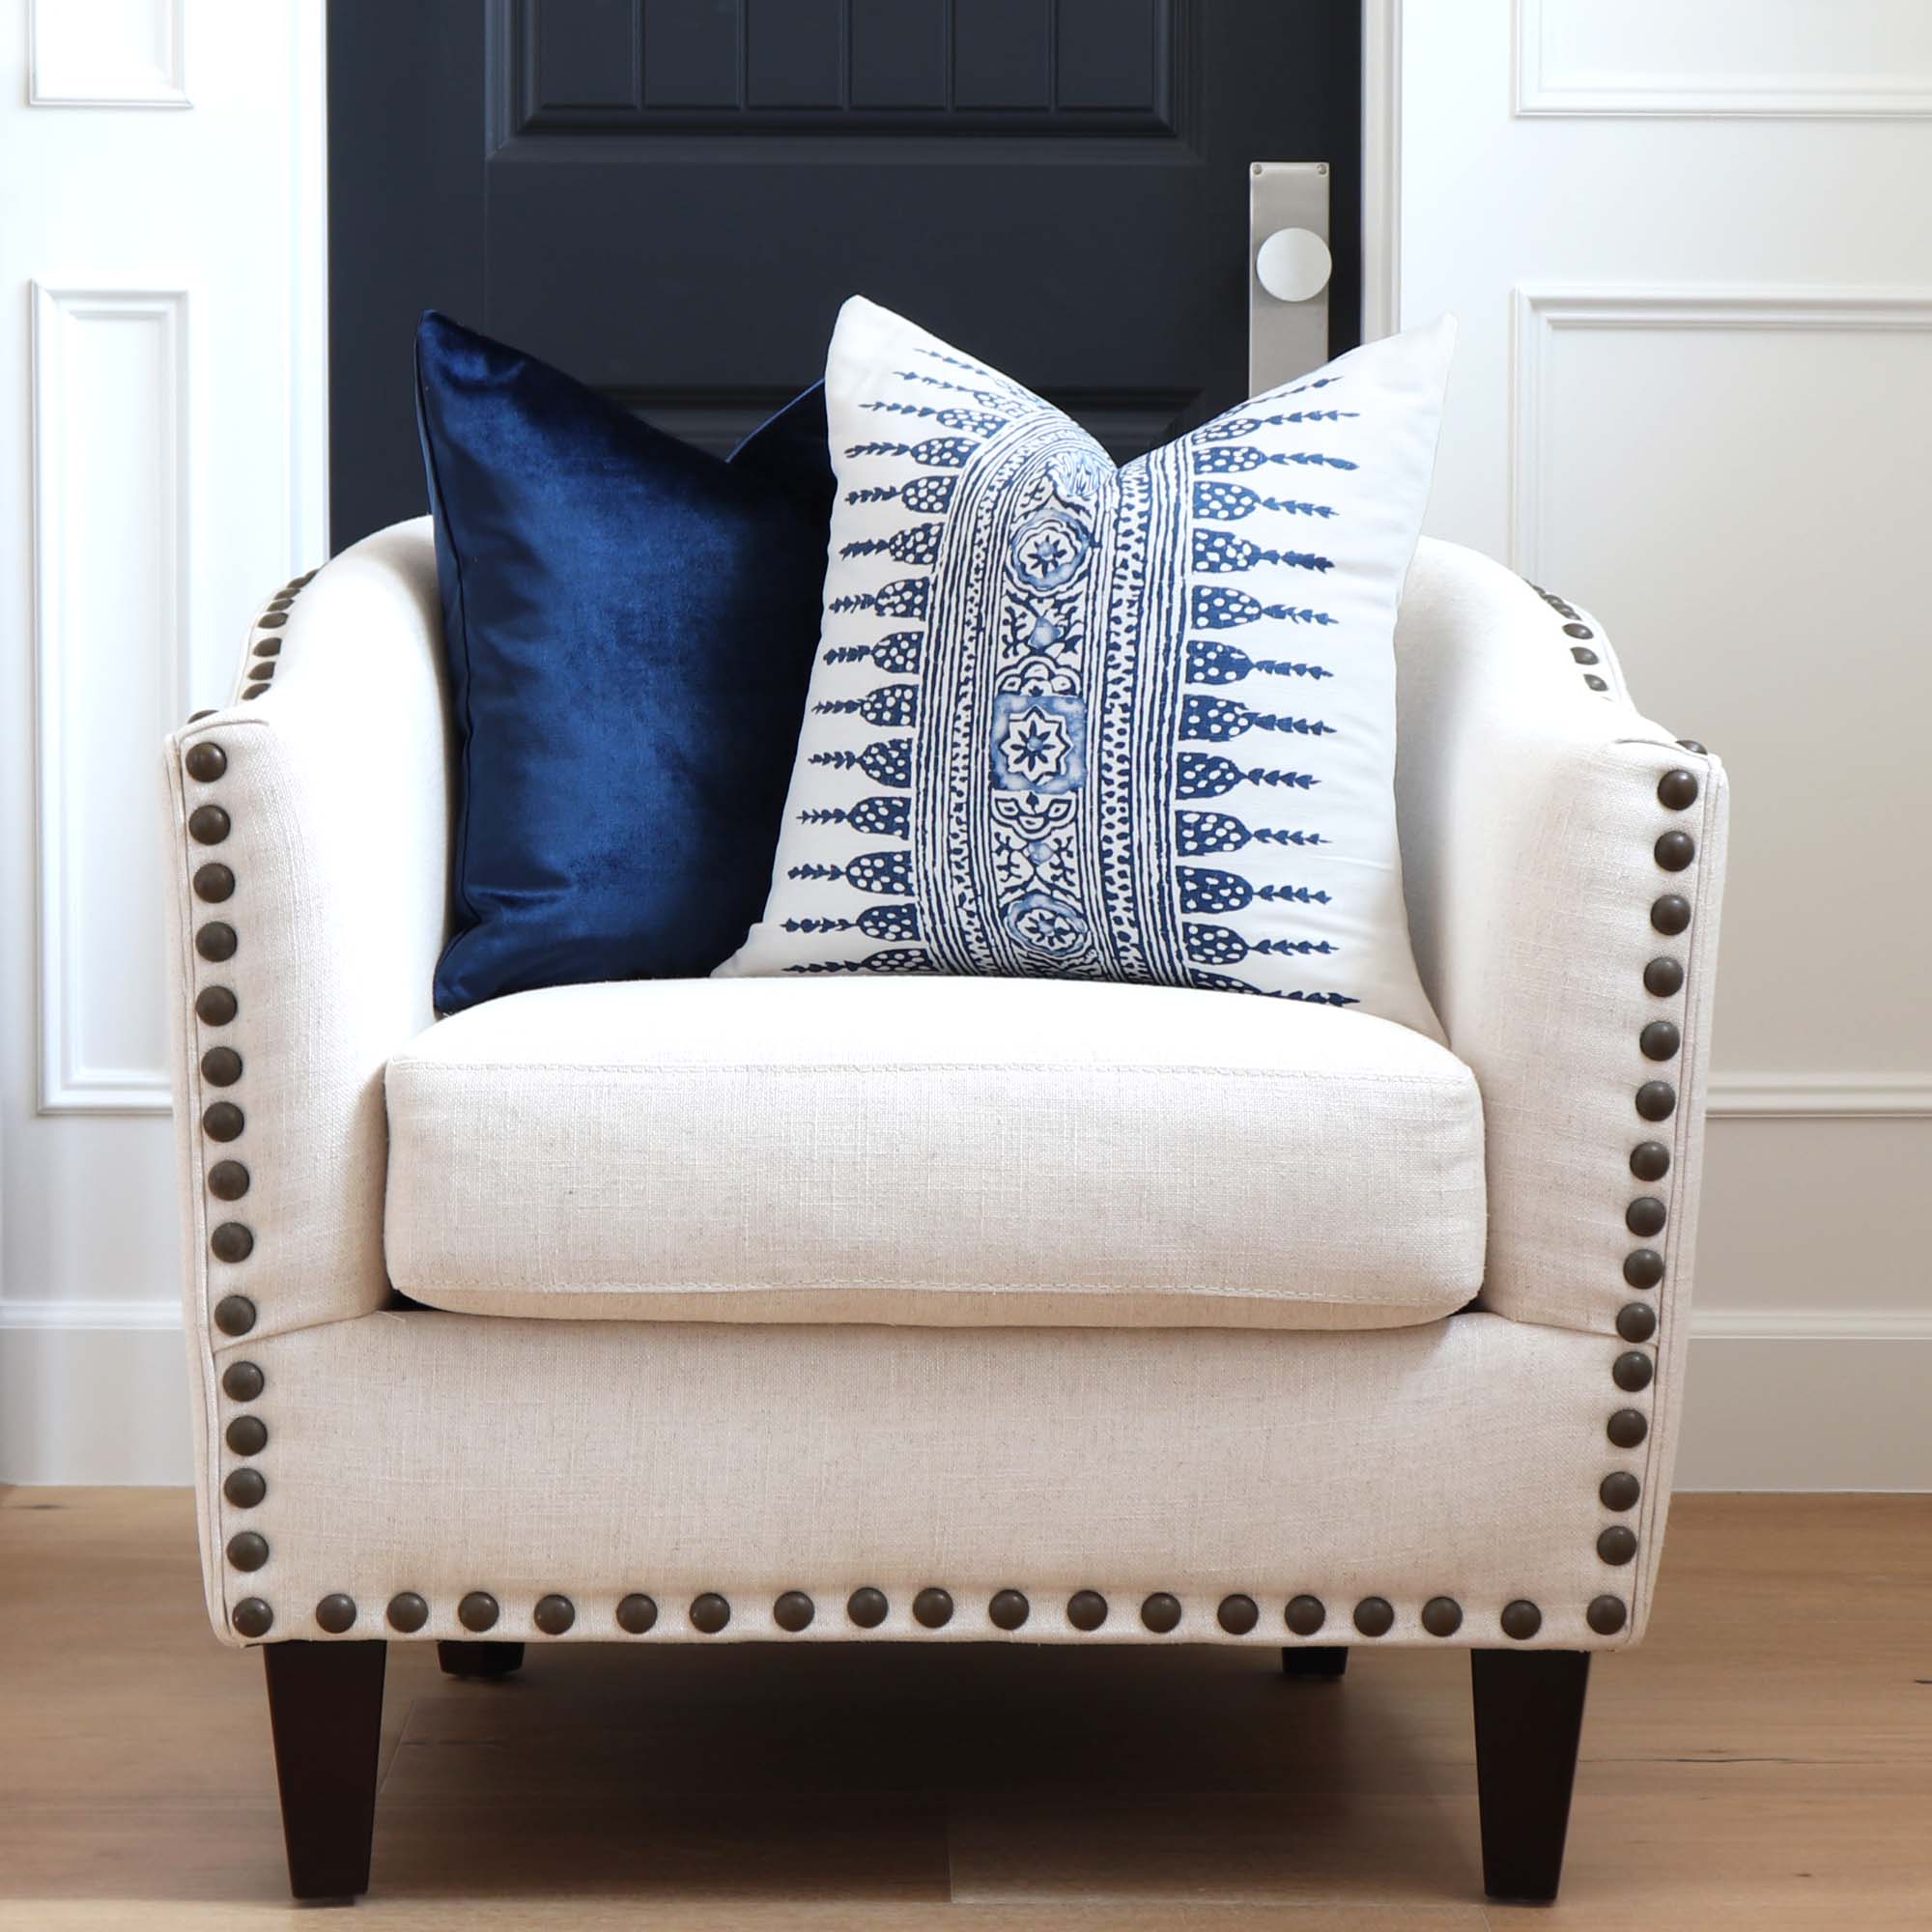 Thibaut Anna French Javanese Stripe Navy Blue Designer Luxury Decorative Throw Pillow Cover on Beige Side Chair